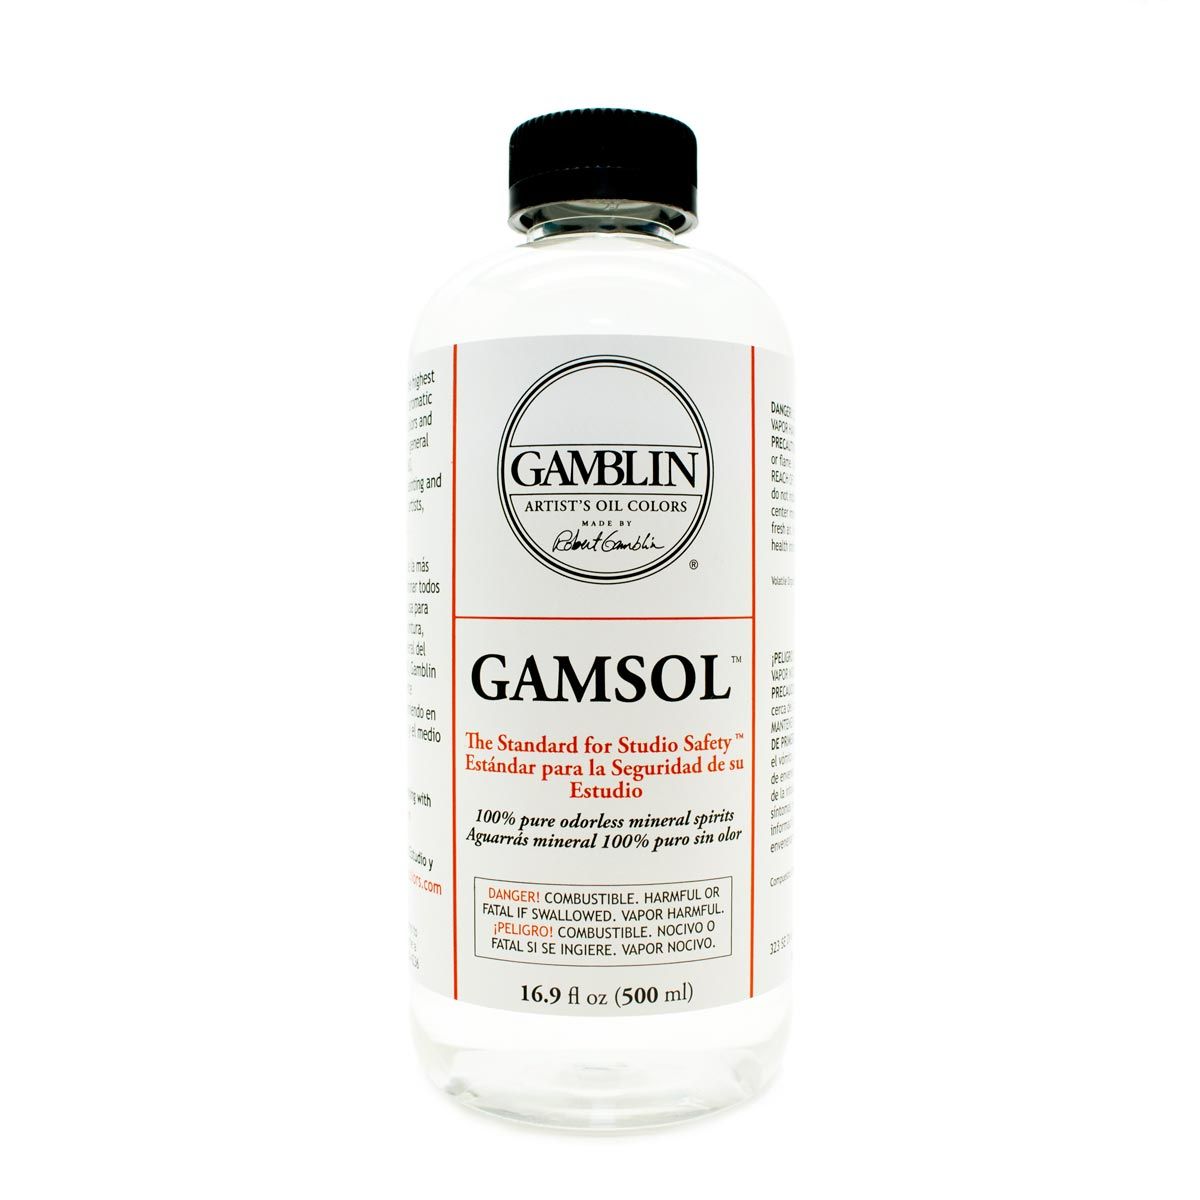 Gamsol Odourless Mineral Spirit 16.9 fl. oz (500 ml)